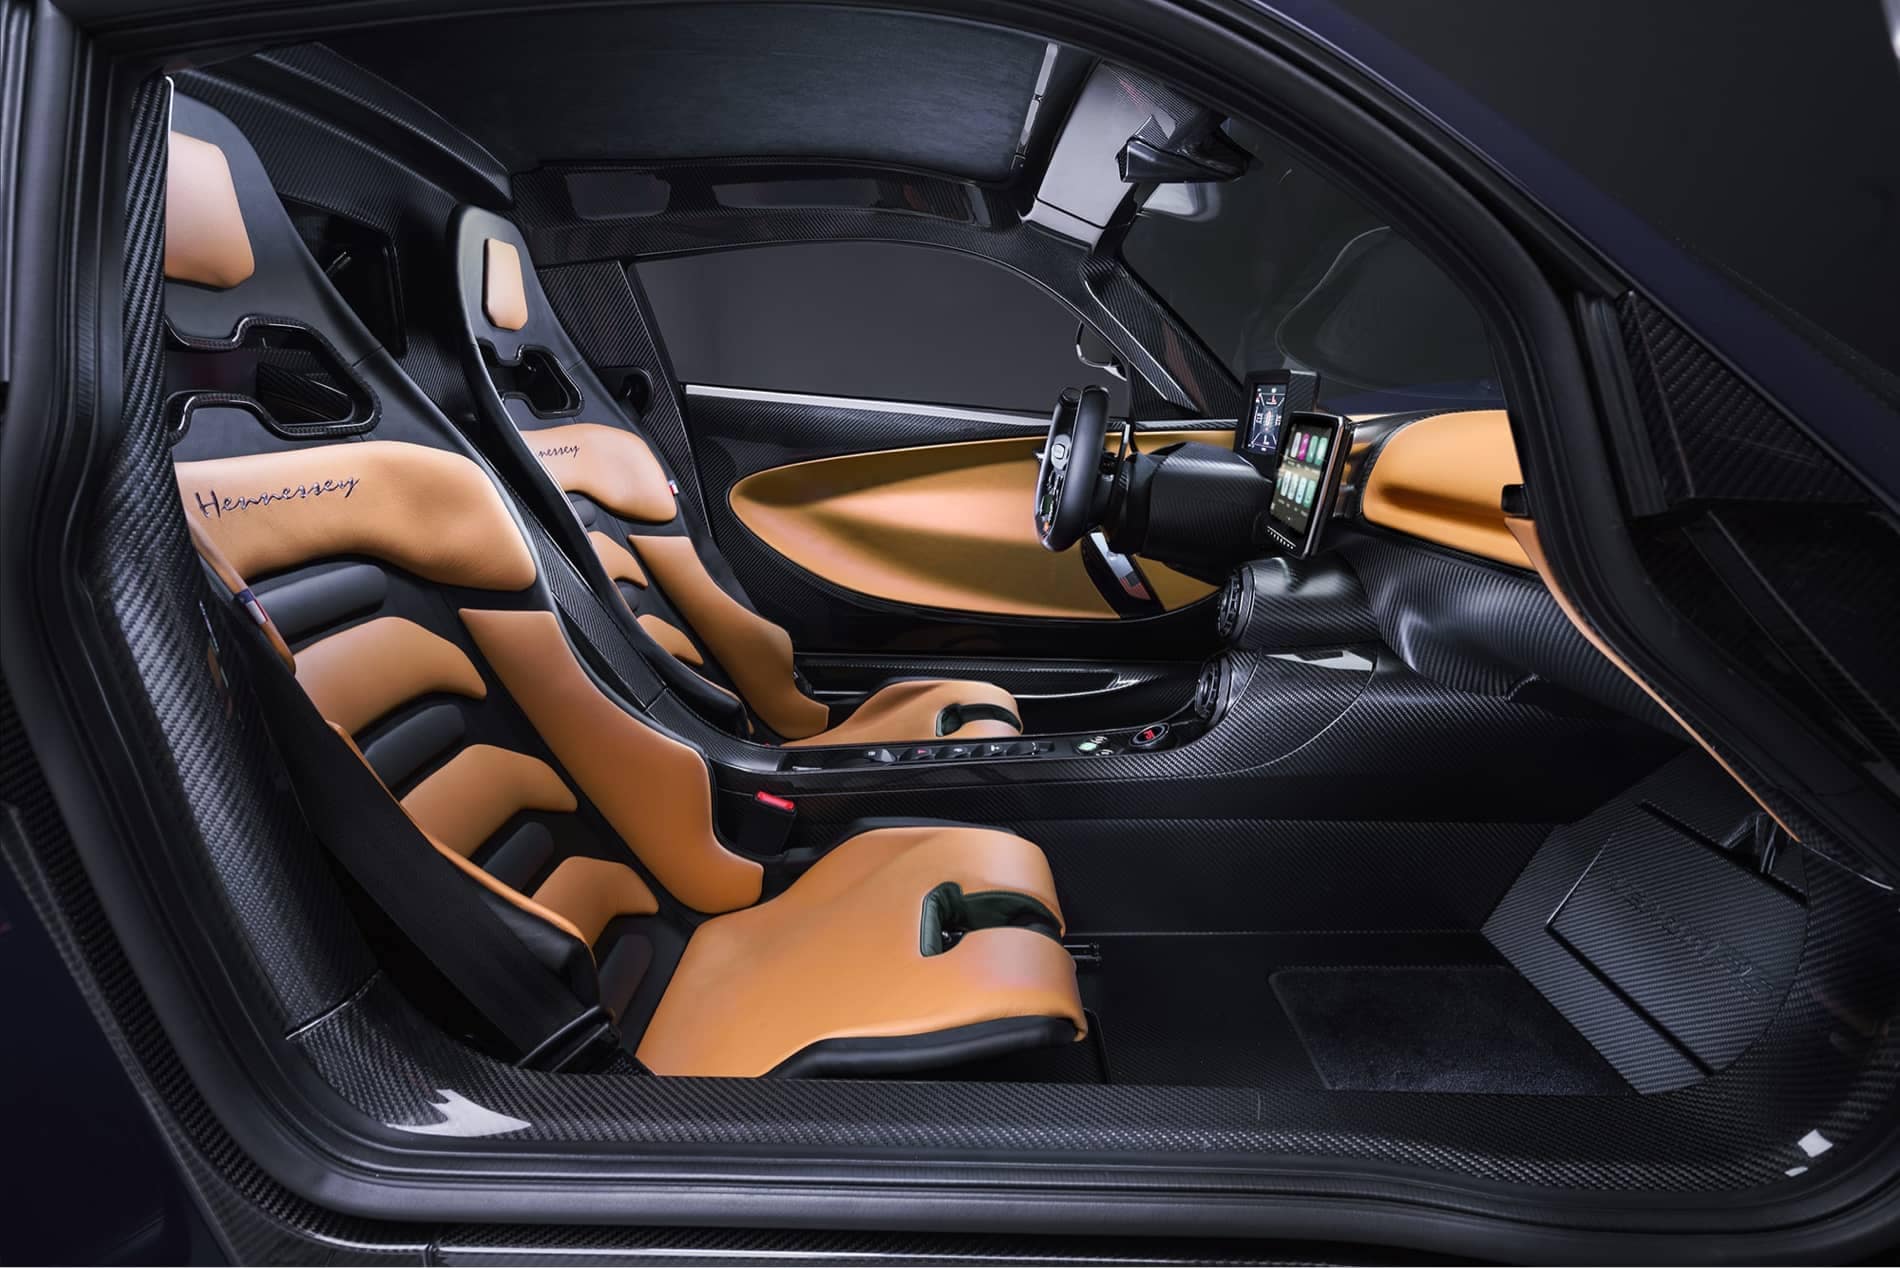 Venom F5 interior passenger side and driver seat